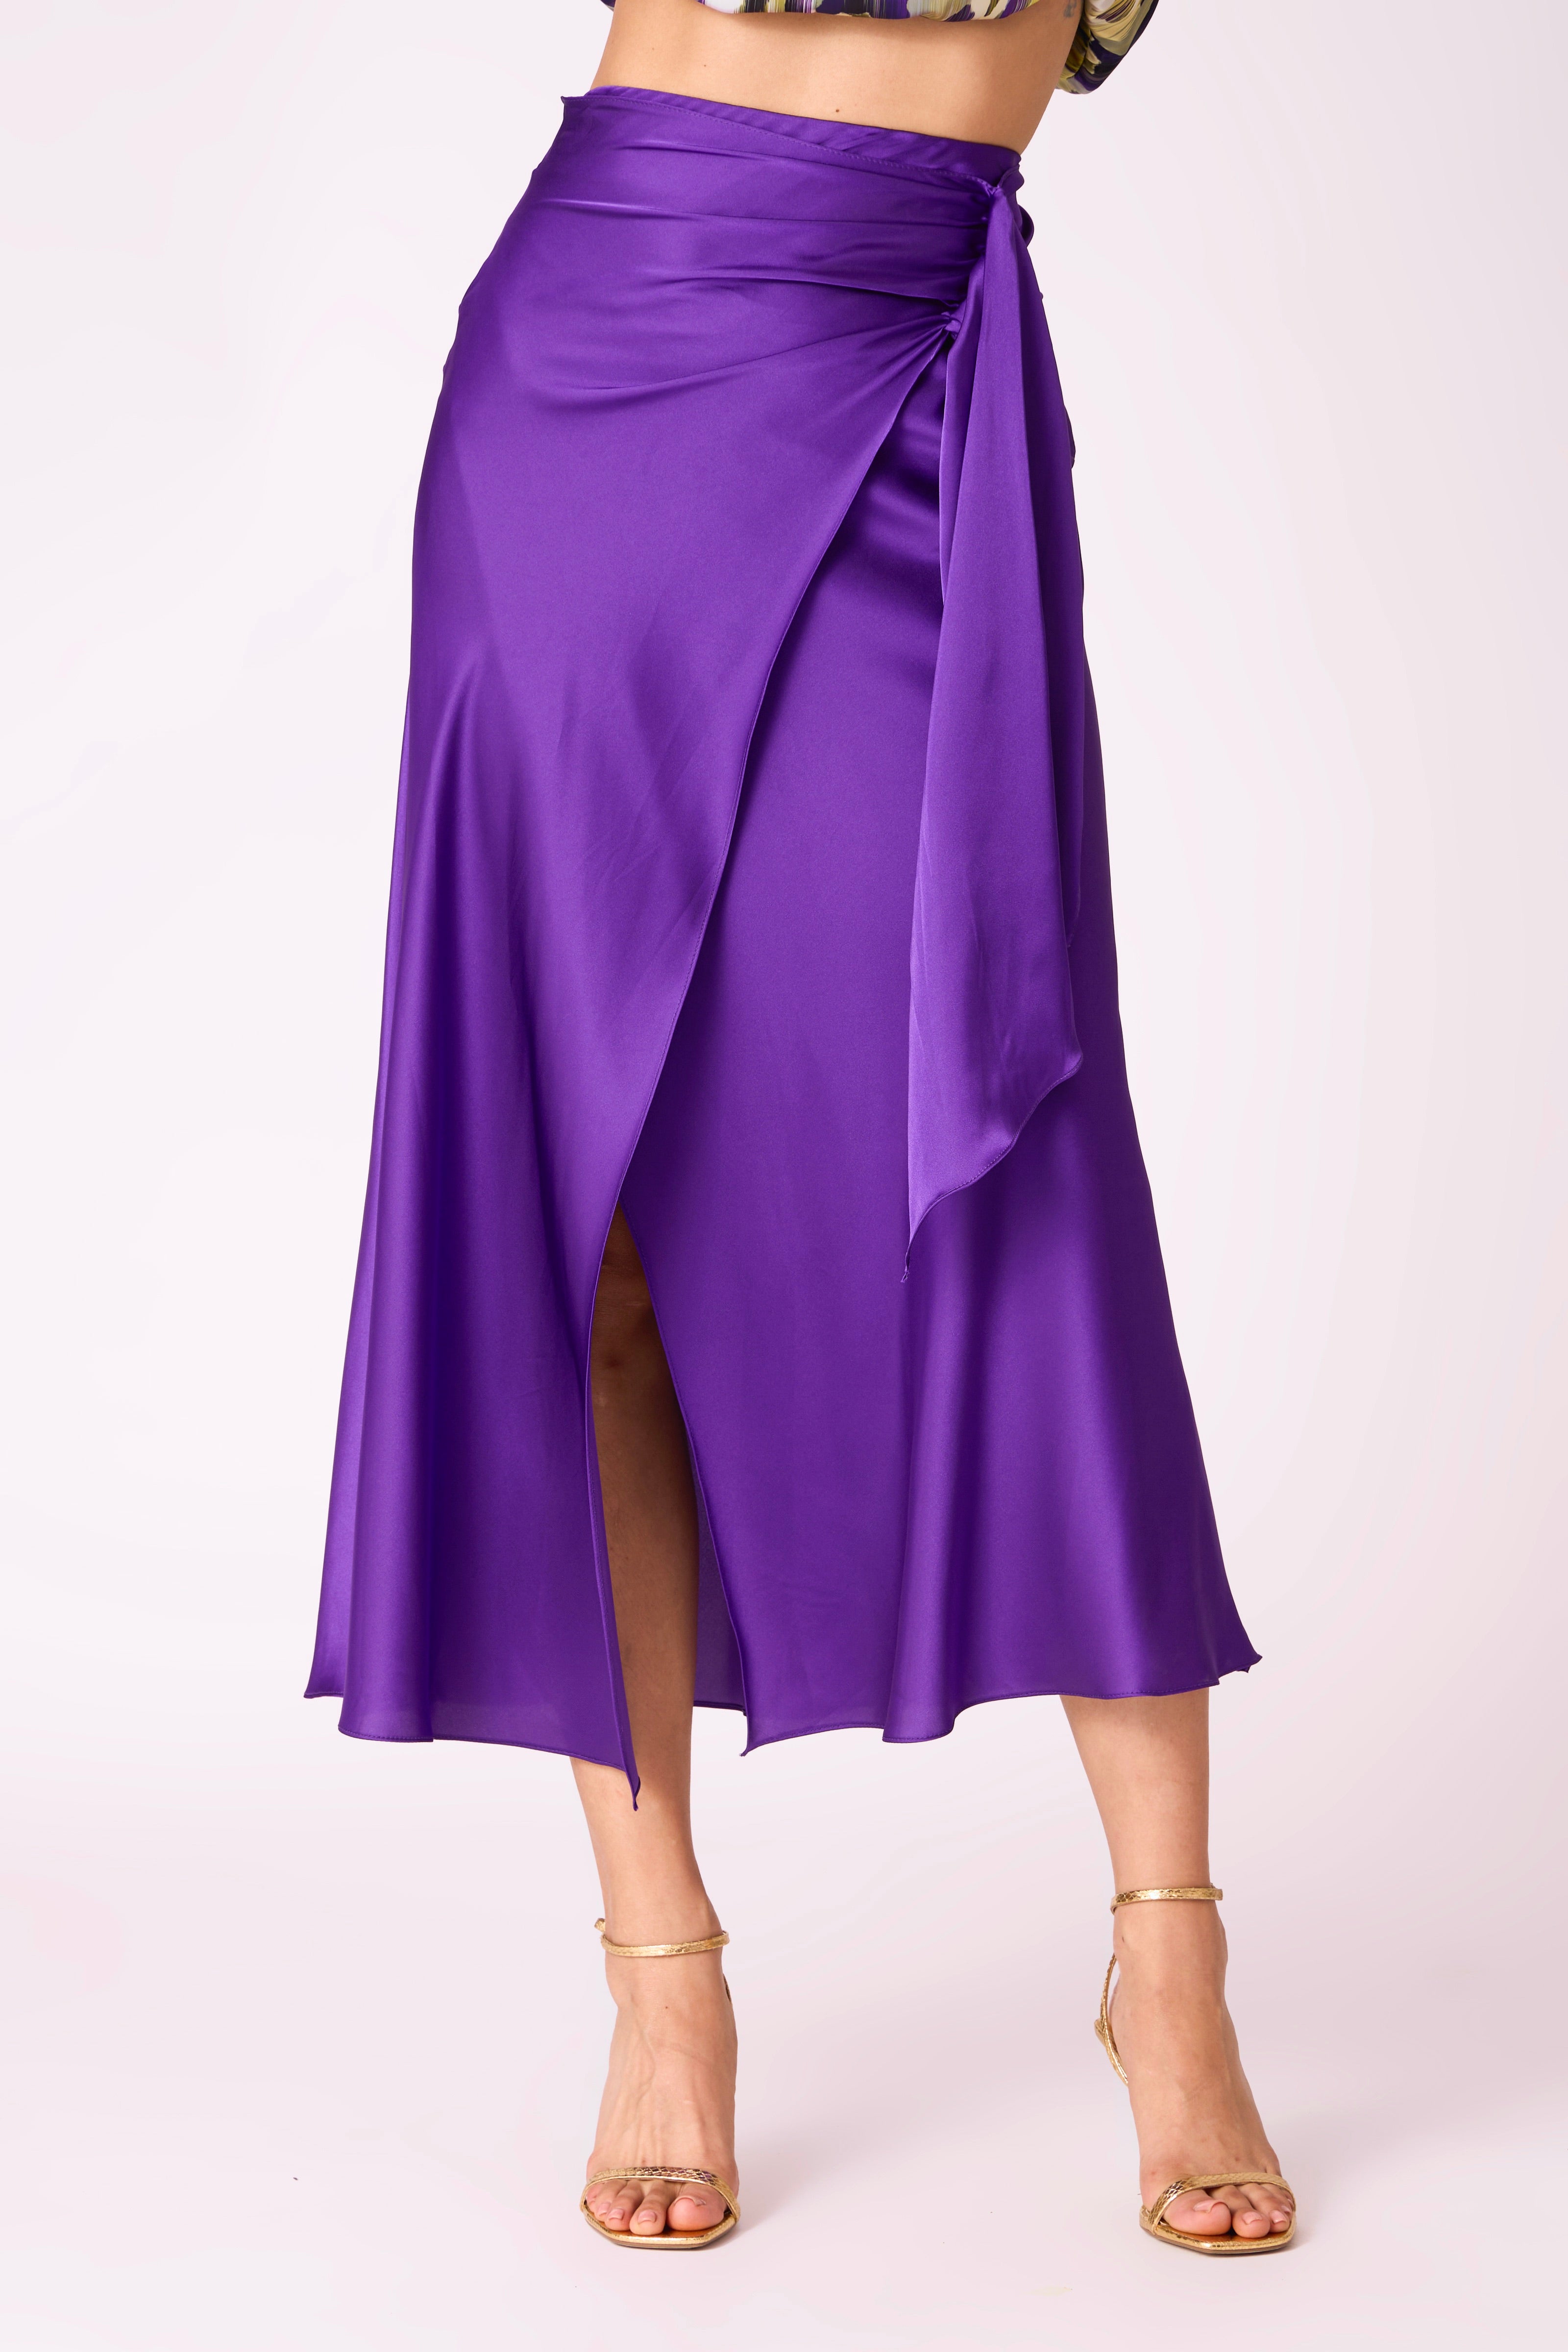 Carissa Satin Skirt - Jewel Purple